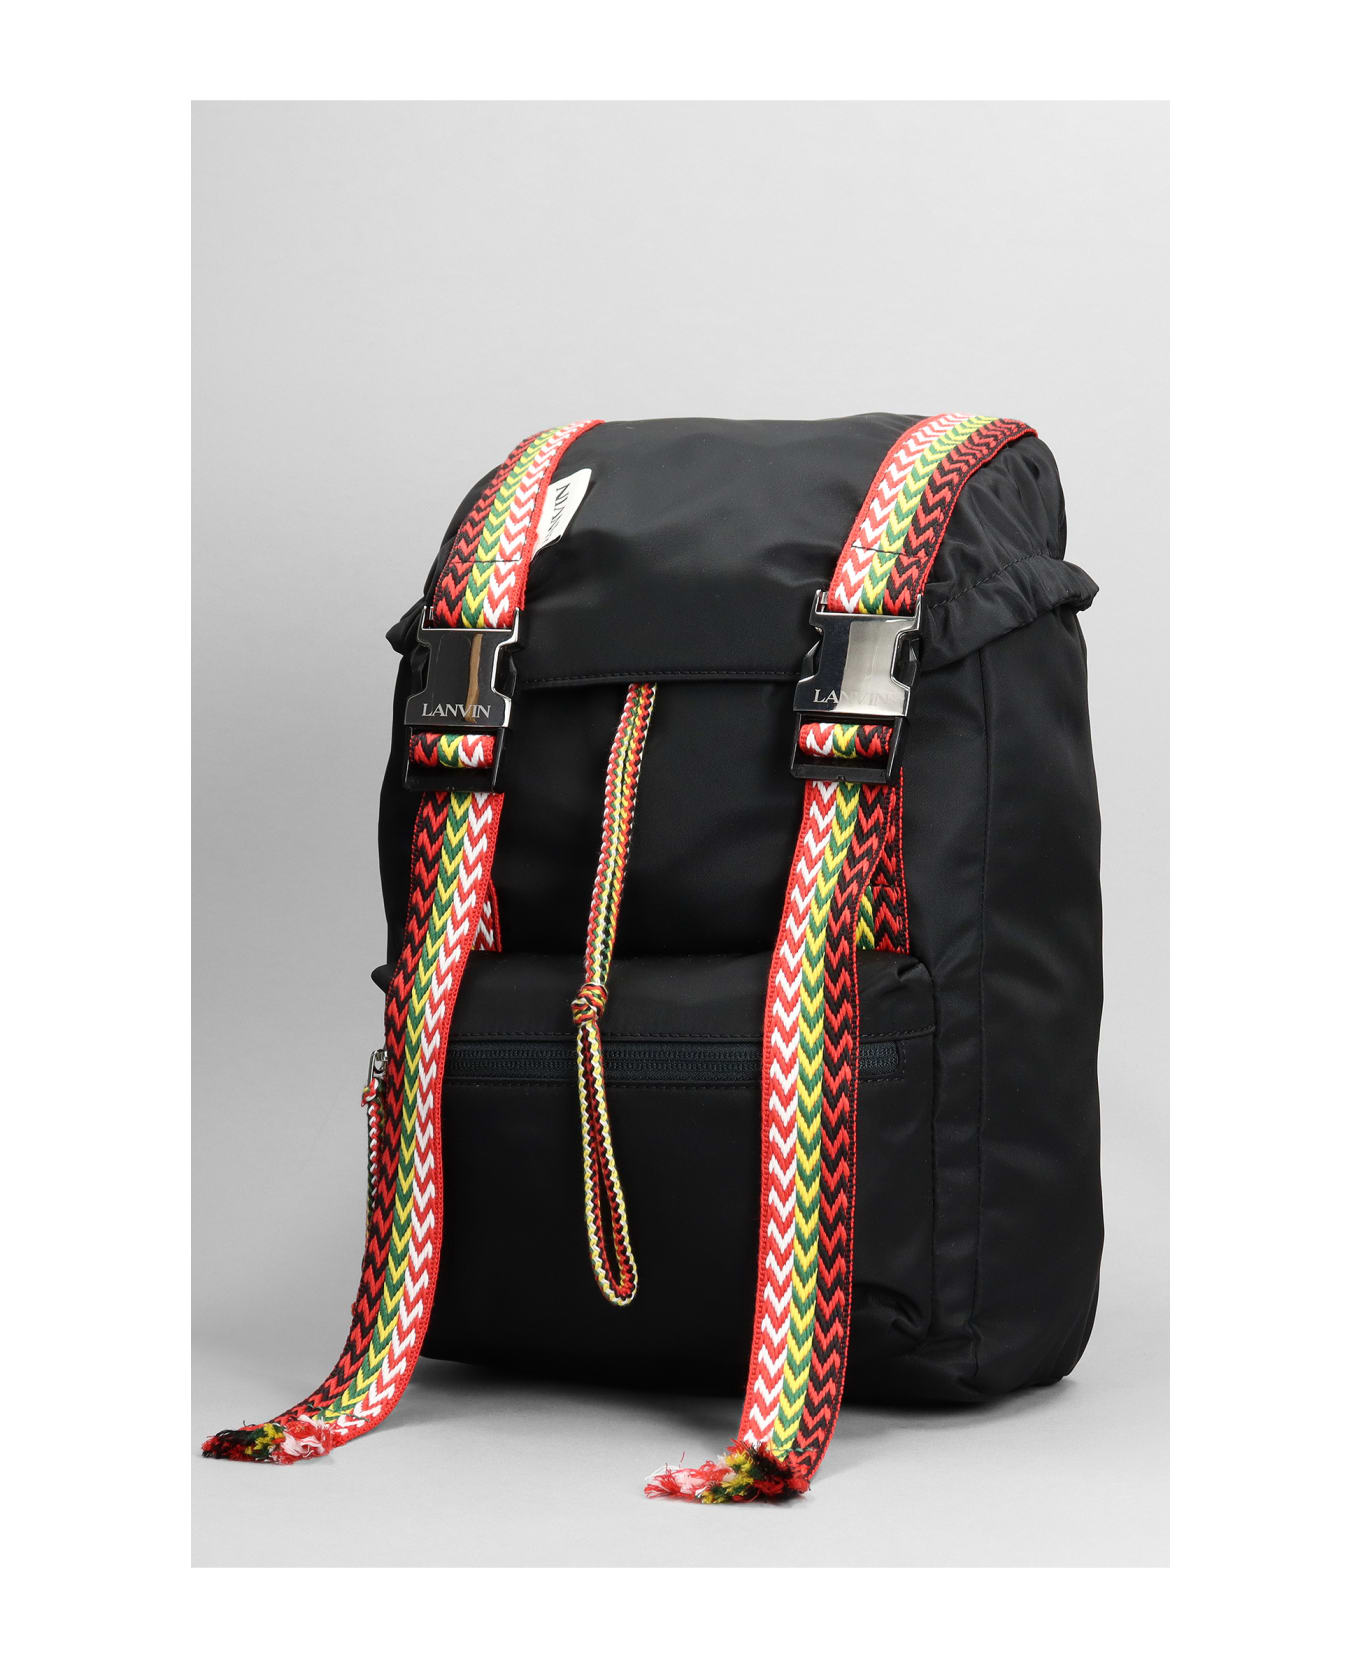 Lanvin Backpack Nano Curb Backpack In Black Nylon - black